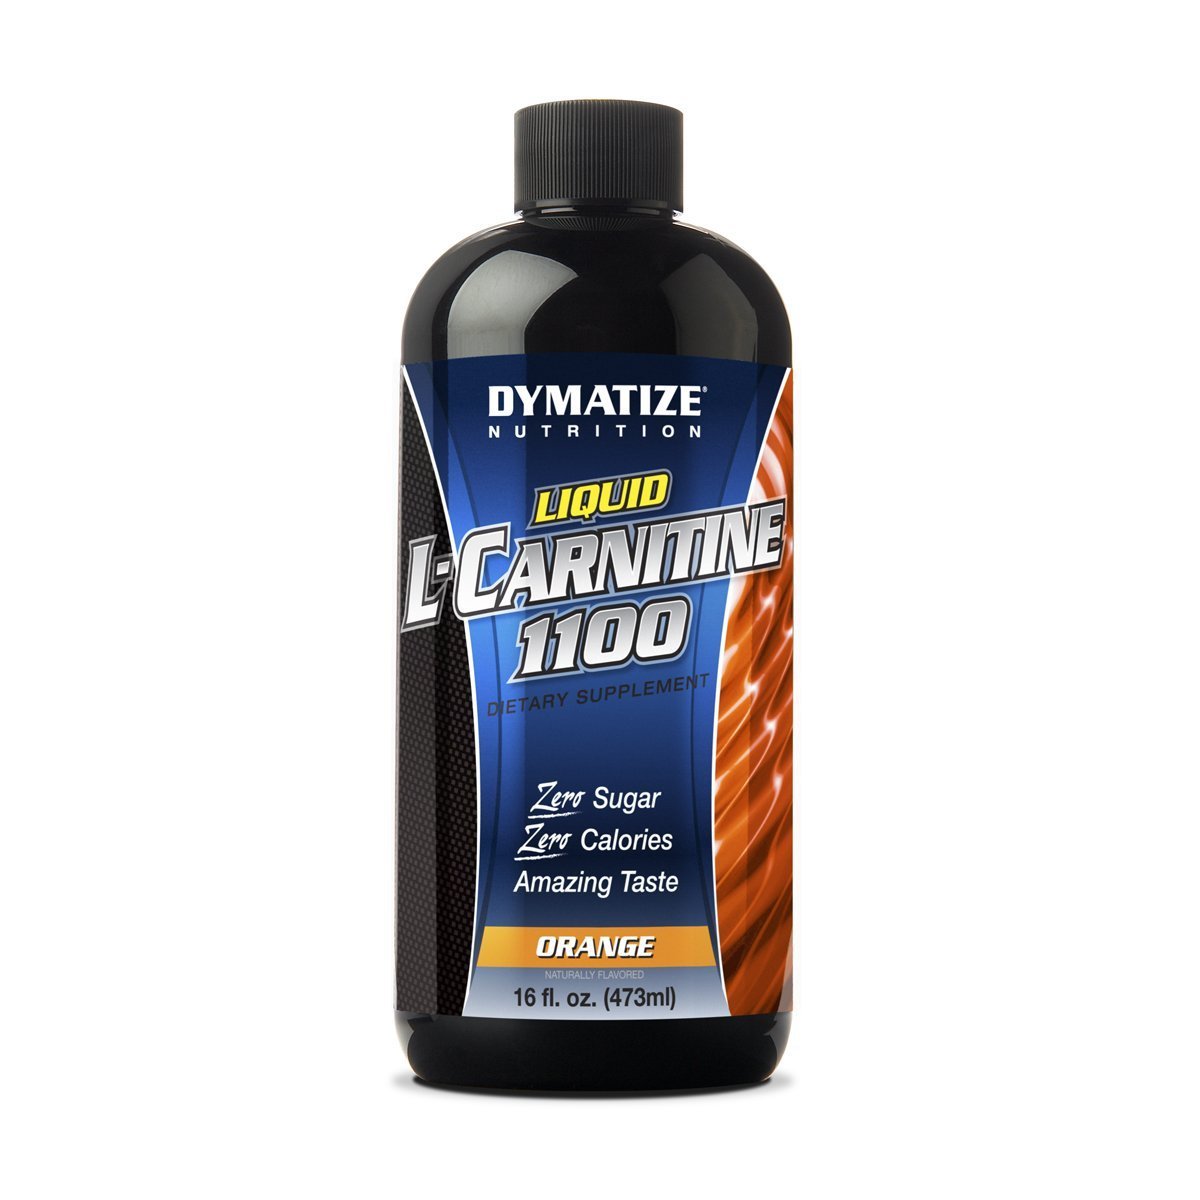 Liquid L-Carnitine 1100, 473 ml, Dymatize Nutrition. L-carnitine. Weight Loss General Health Detoxification Stress resistance Lowering cholesterol Antioxidant properties 